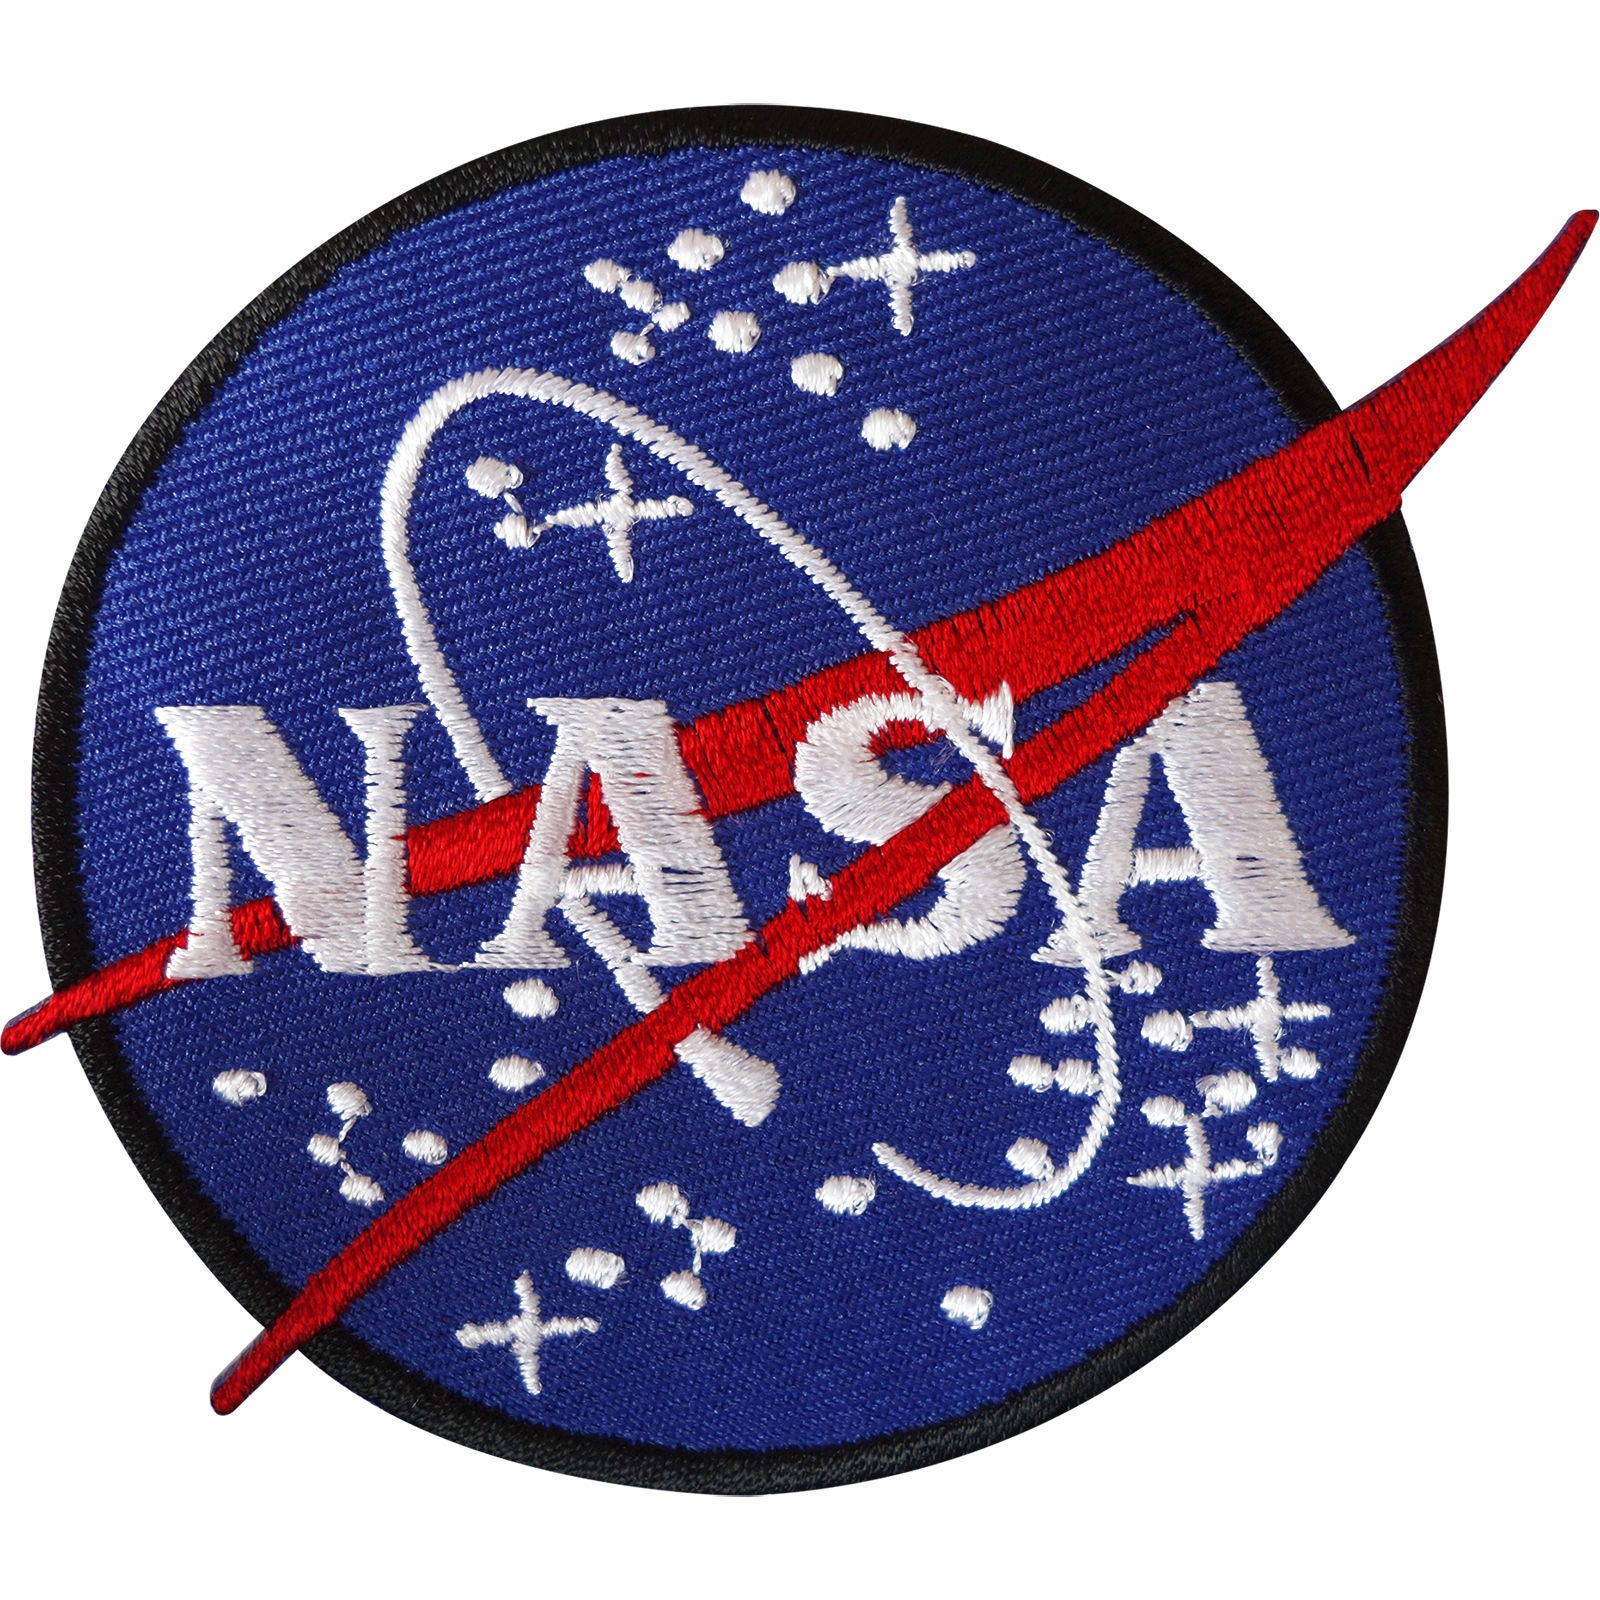 Nasa Logo Astronaut Space Iron On Patch 